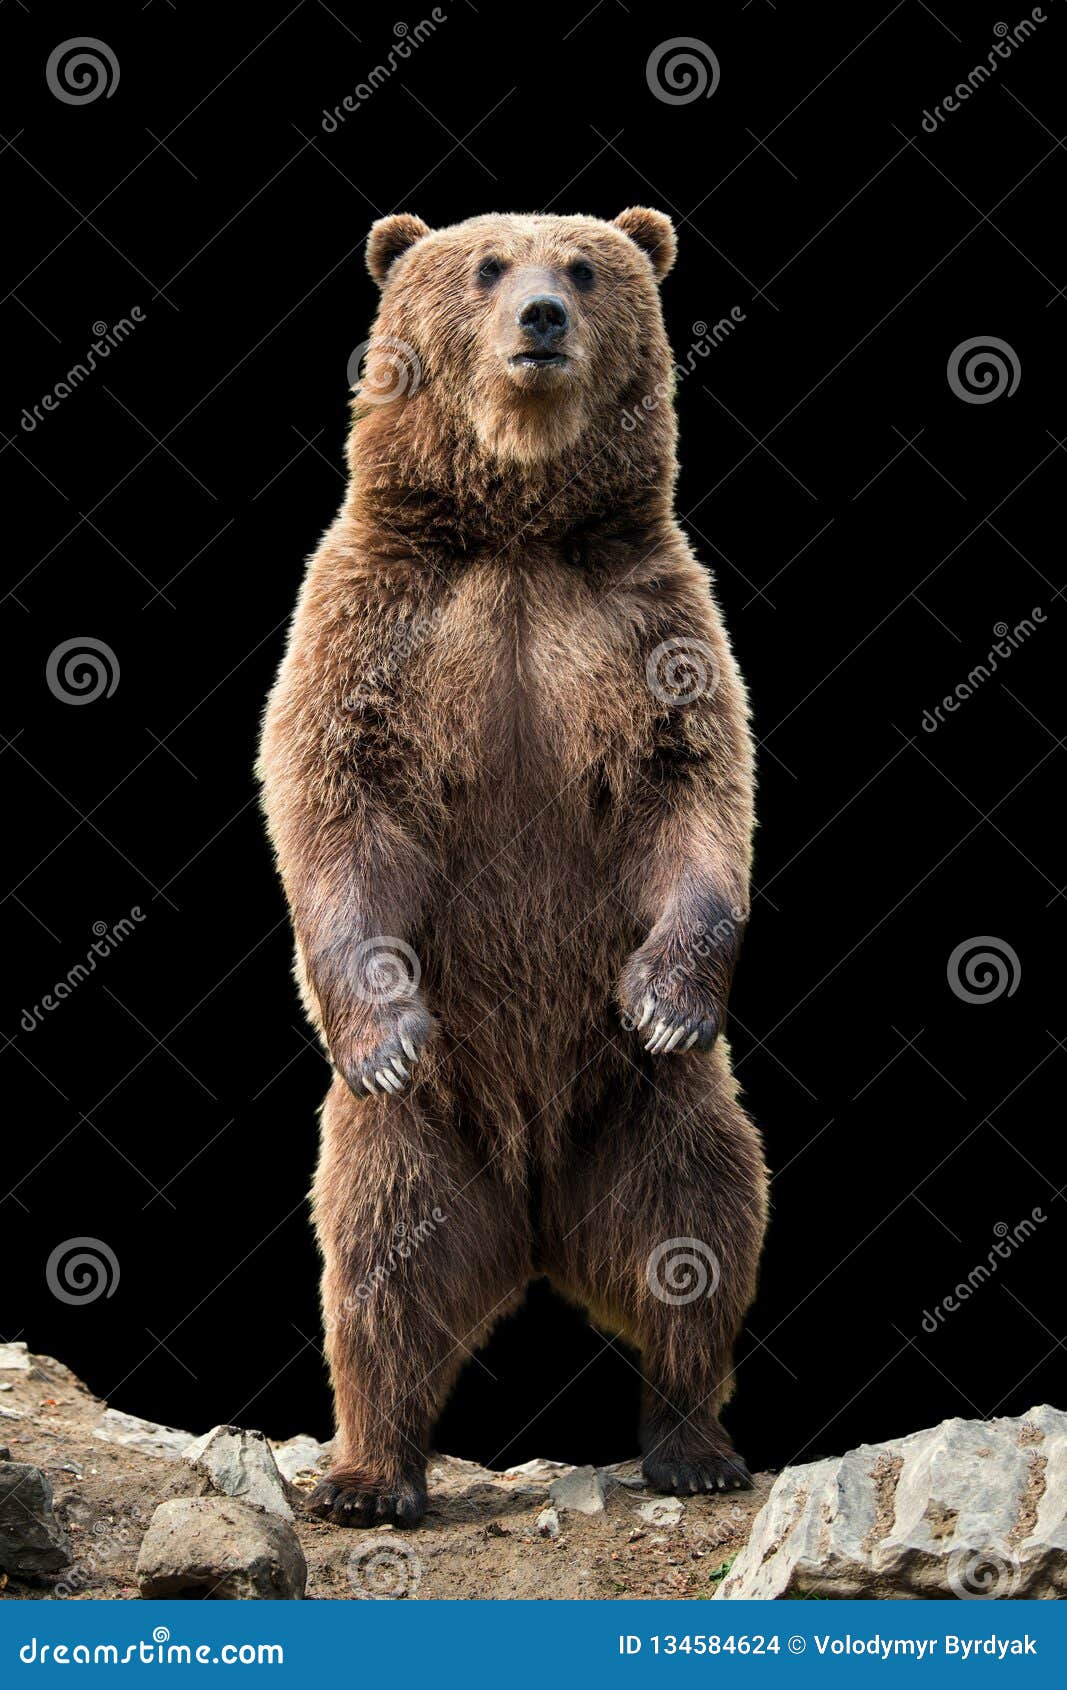 big brown bear standing on his hind legs